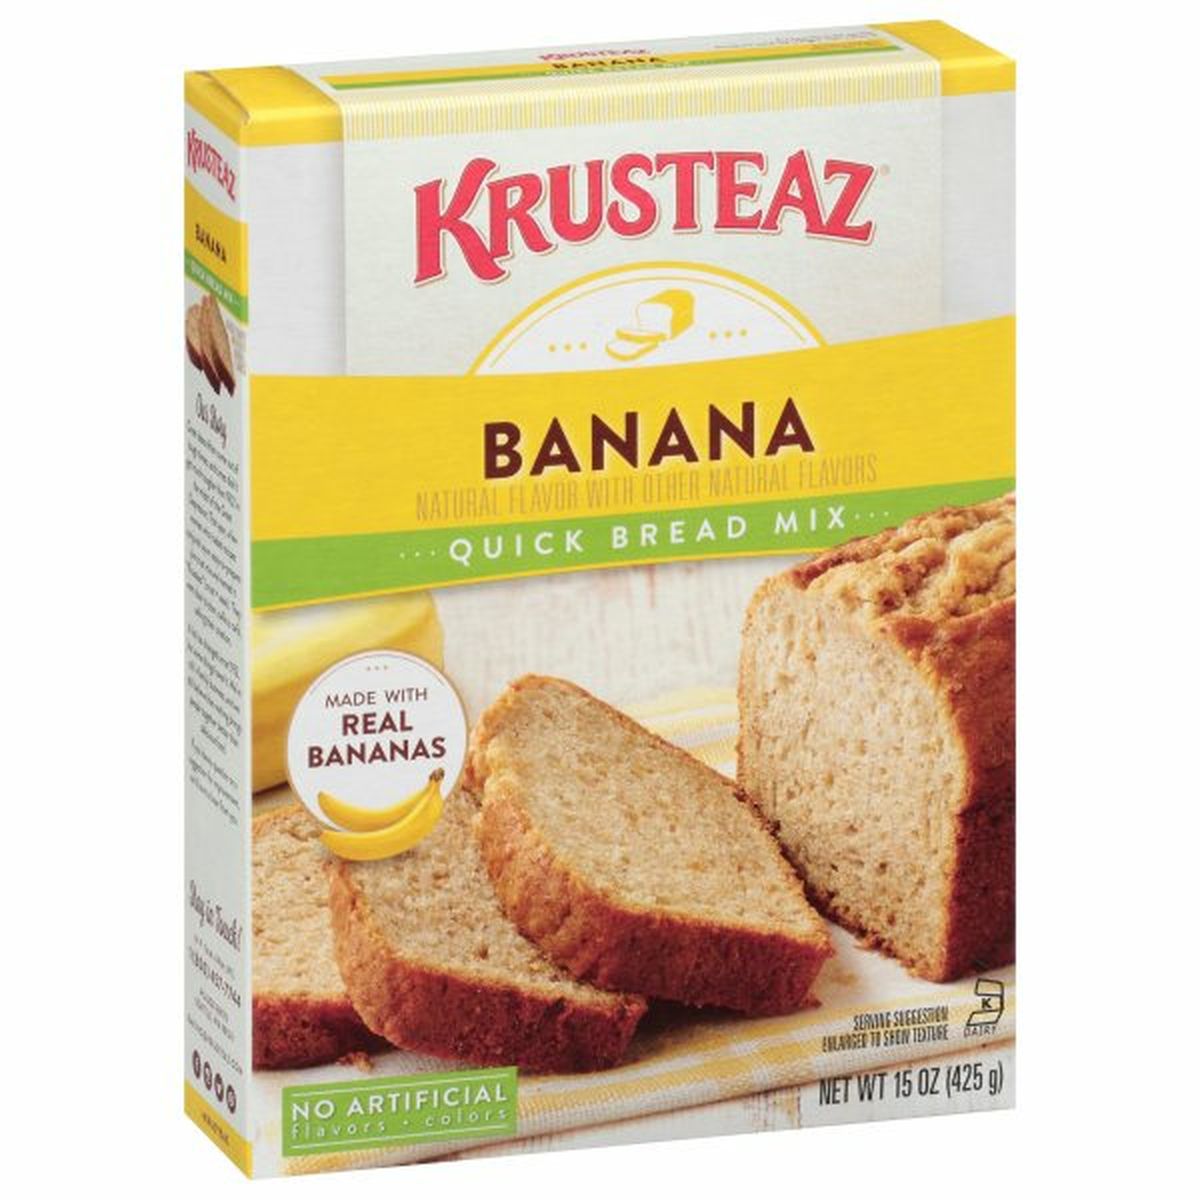 Calories in Krusteaz Quick Bread Mix, Banana